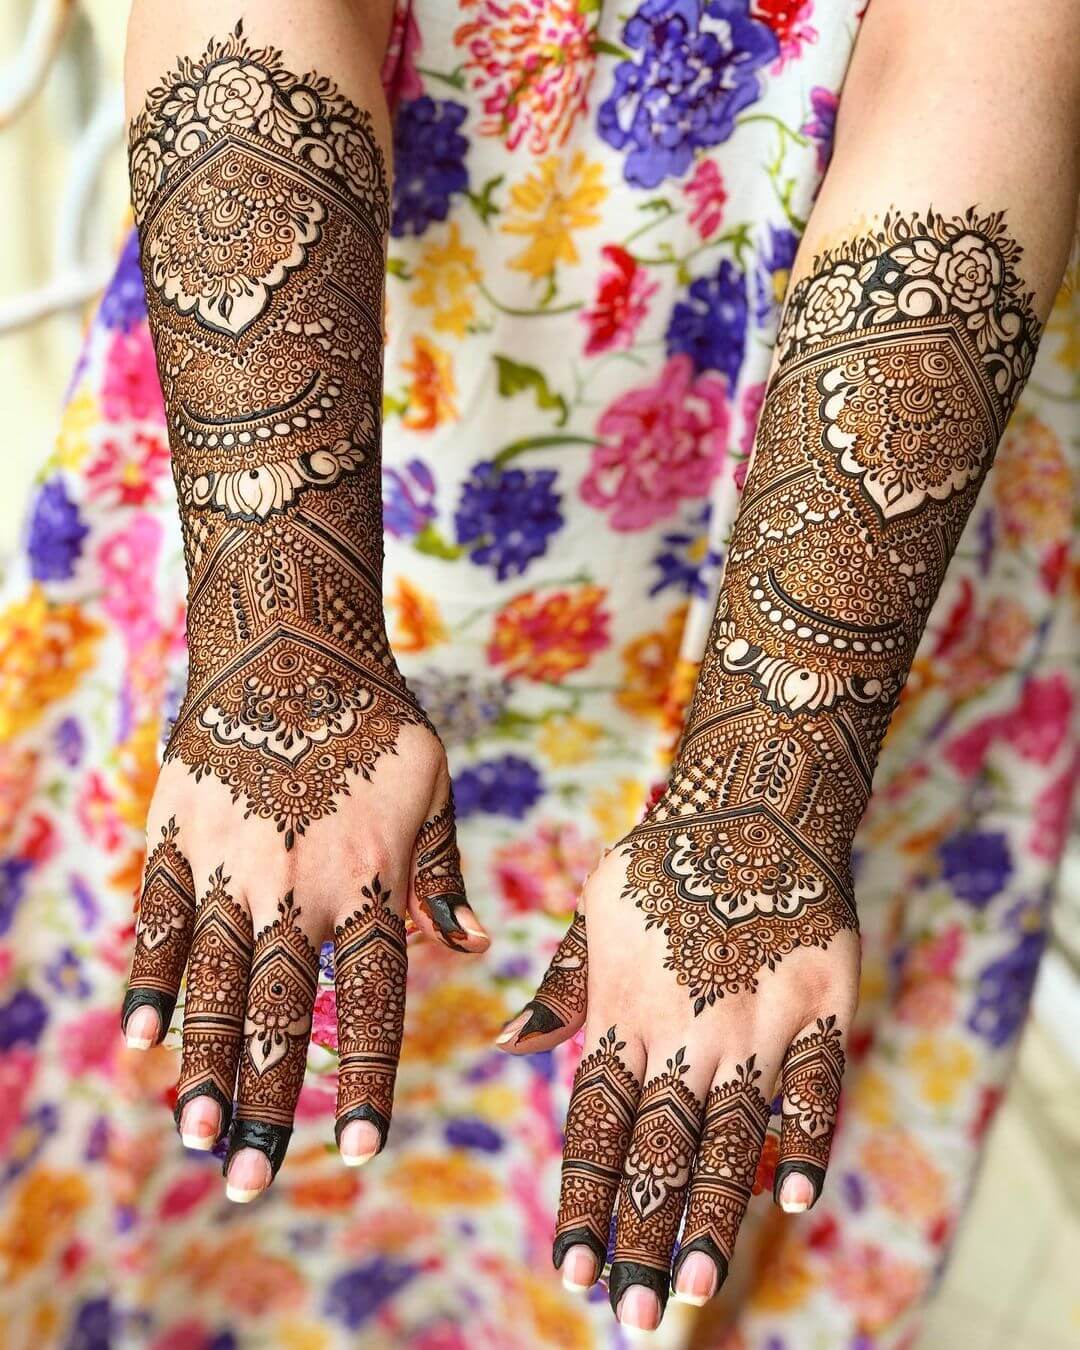 Pakistani Bridal Mehndi Designs for Front and Back Full Hand The V - Shaped Mehndi Design